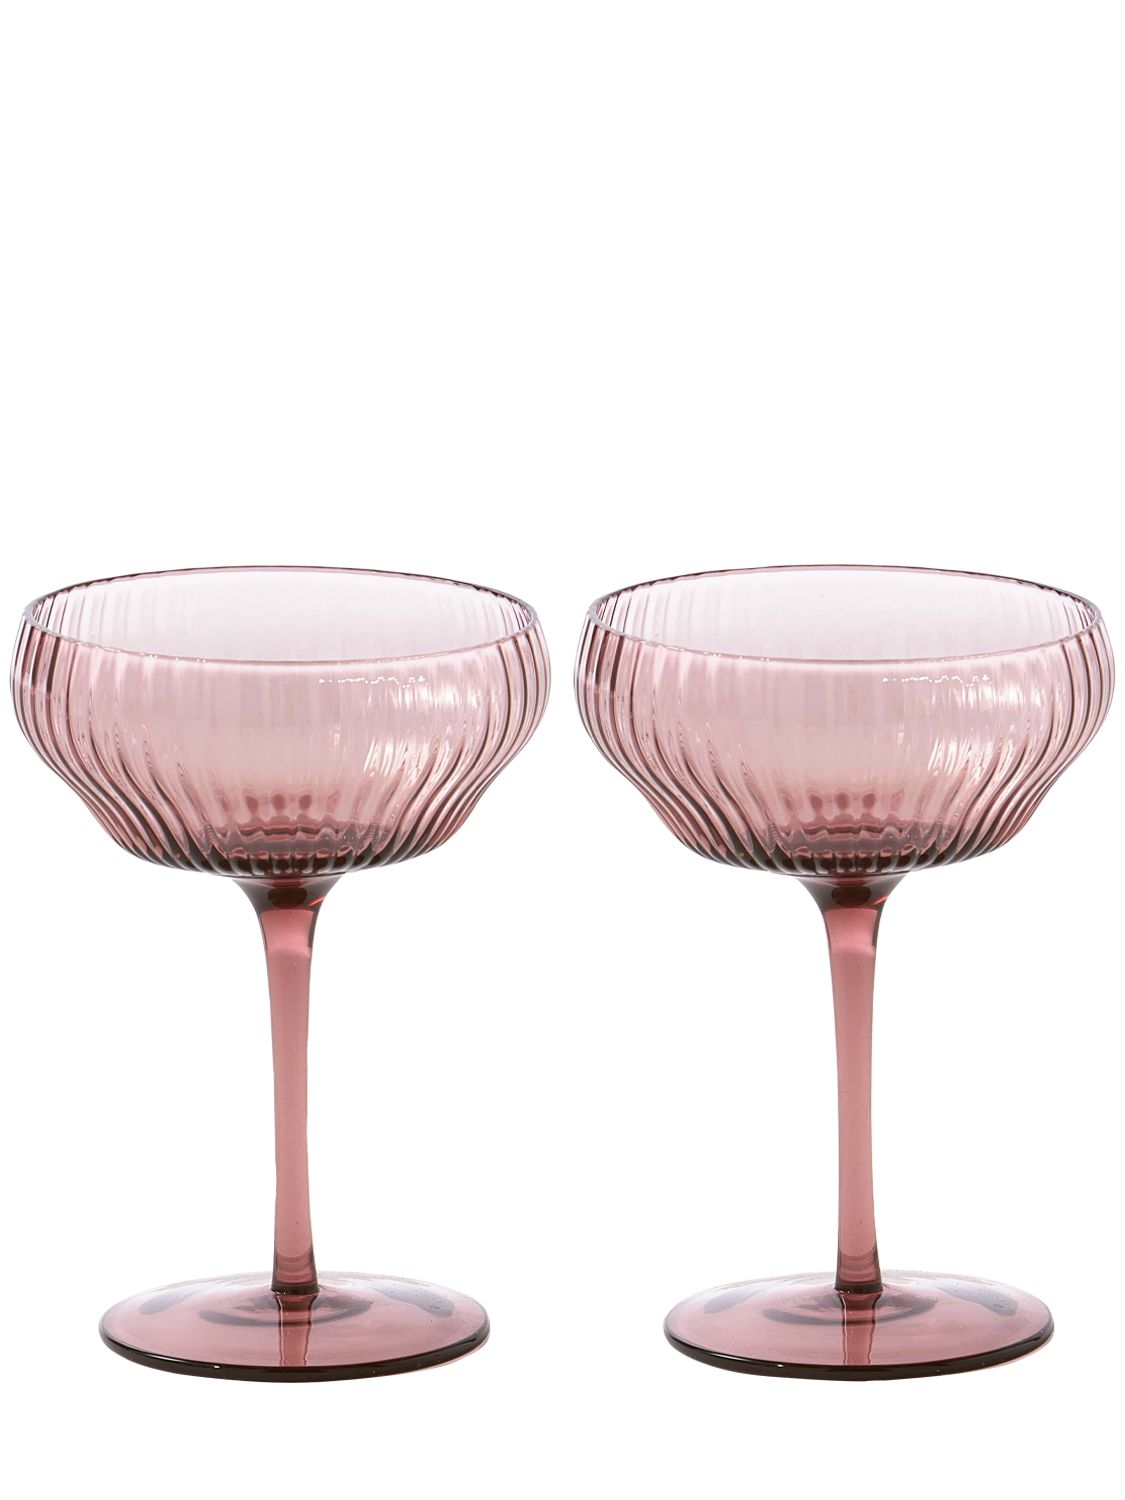 Polspotten Pum杯子2个套装 In Pink